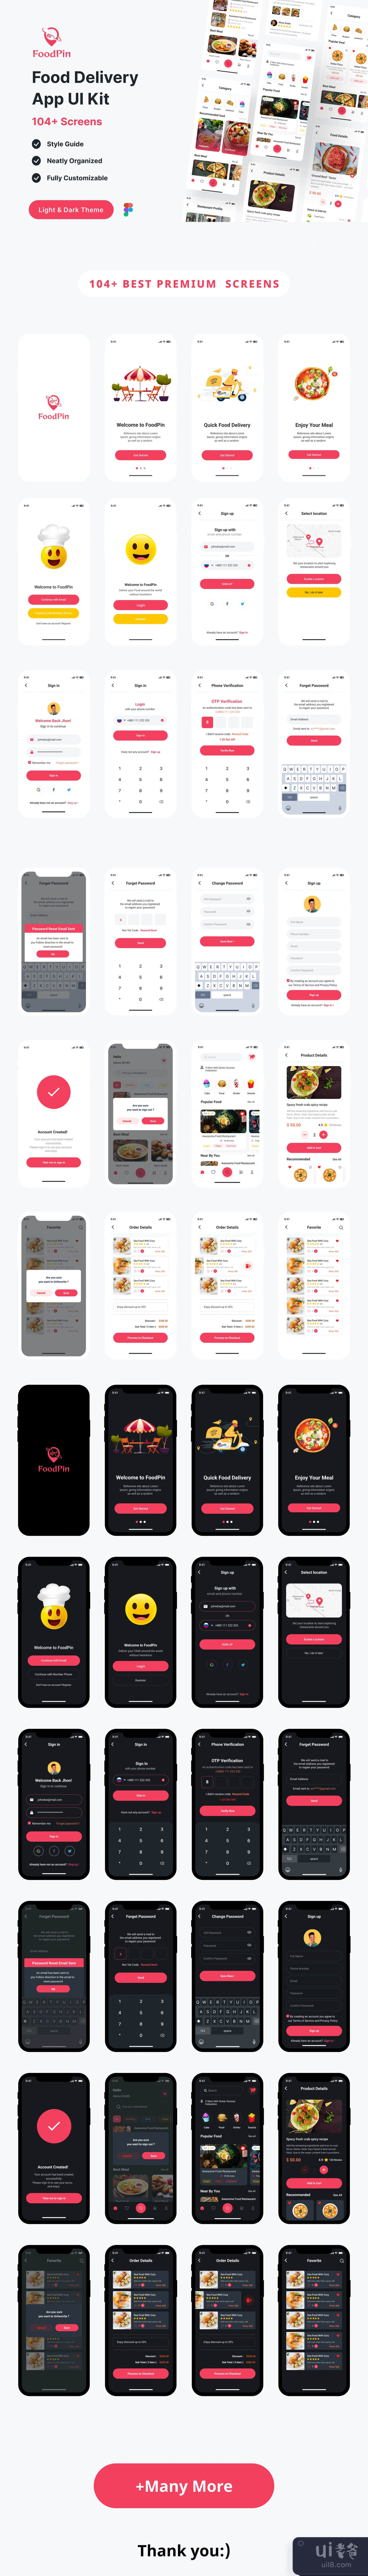 FoodPin - 食品配送应用UI Kit (FoodPin - Food Delivery App UI Kit)插图1